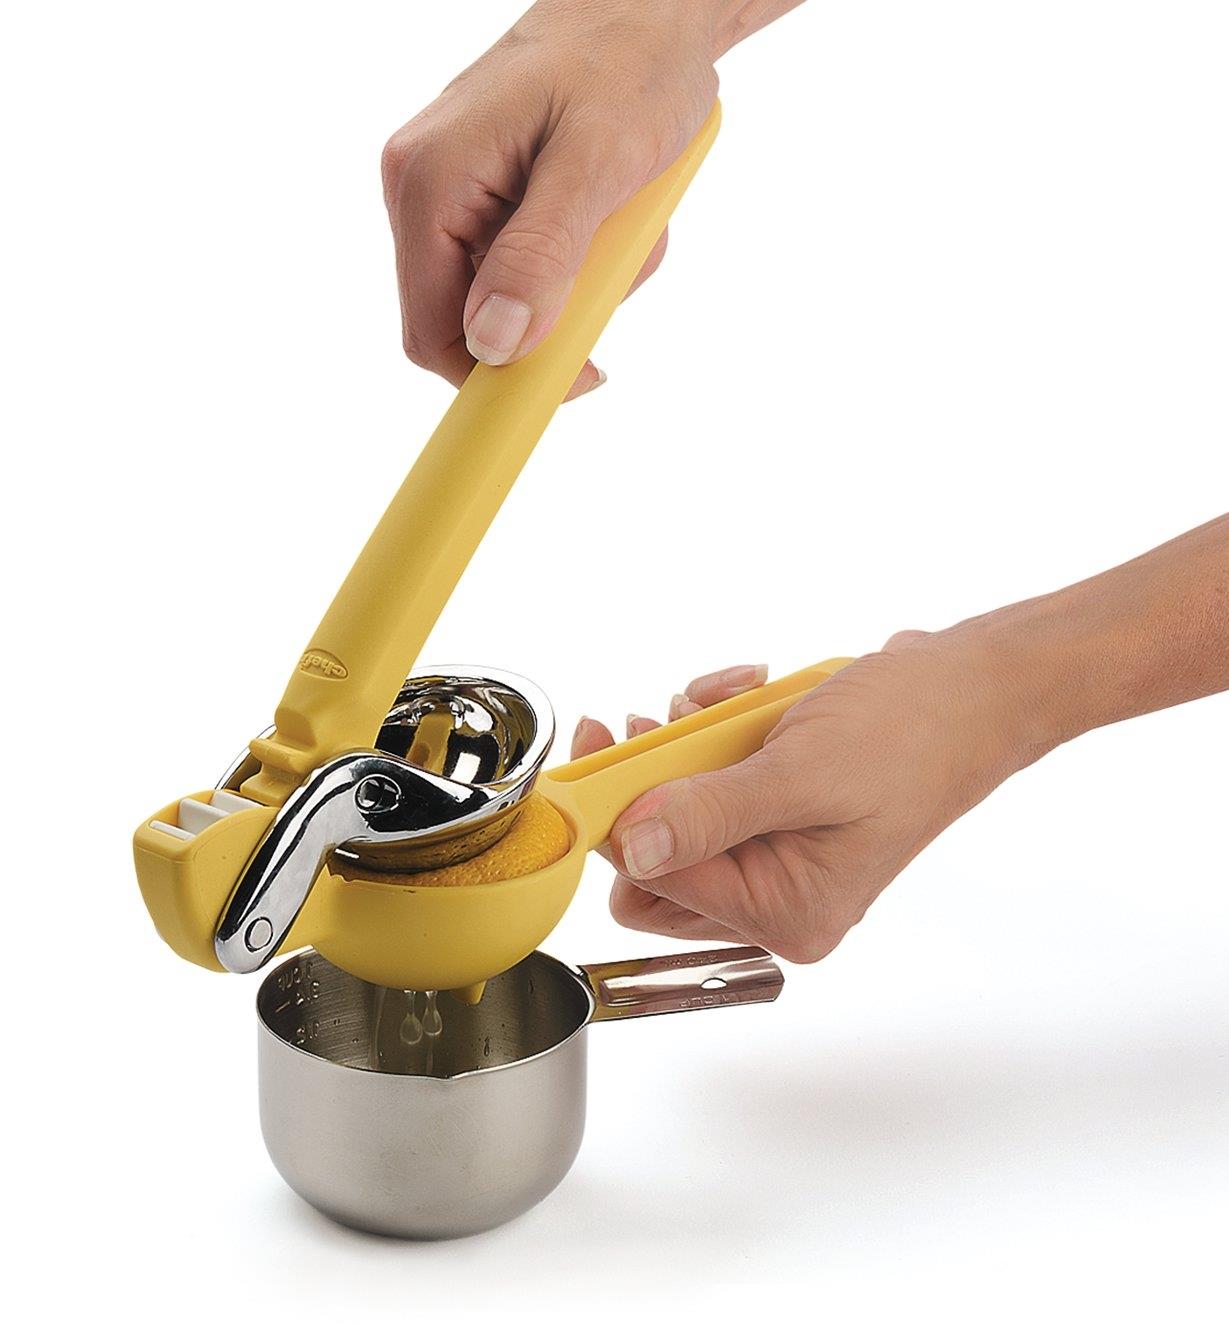 Lemon & Lime Press extracting lemon juice into a measuring cup